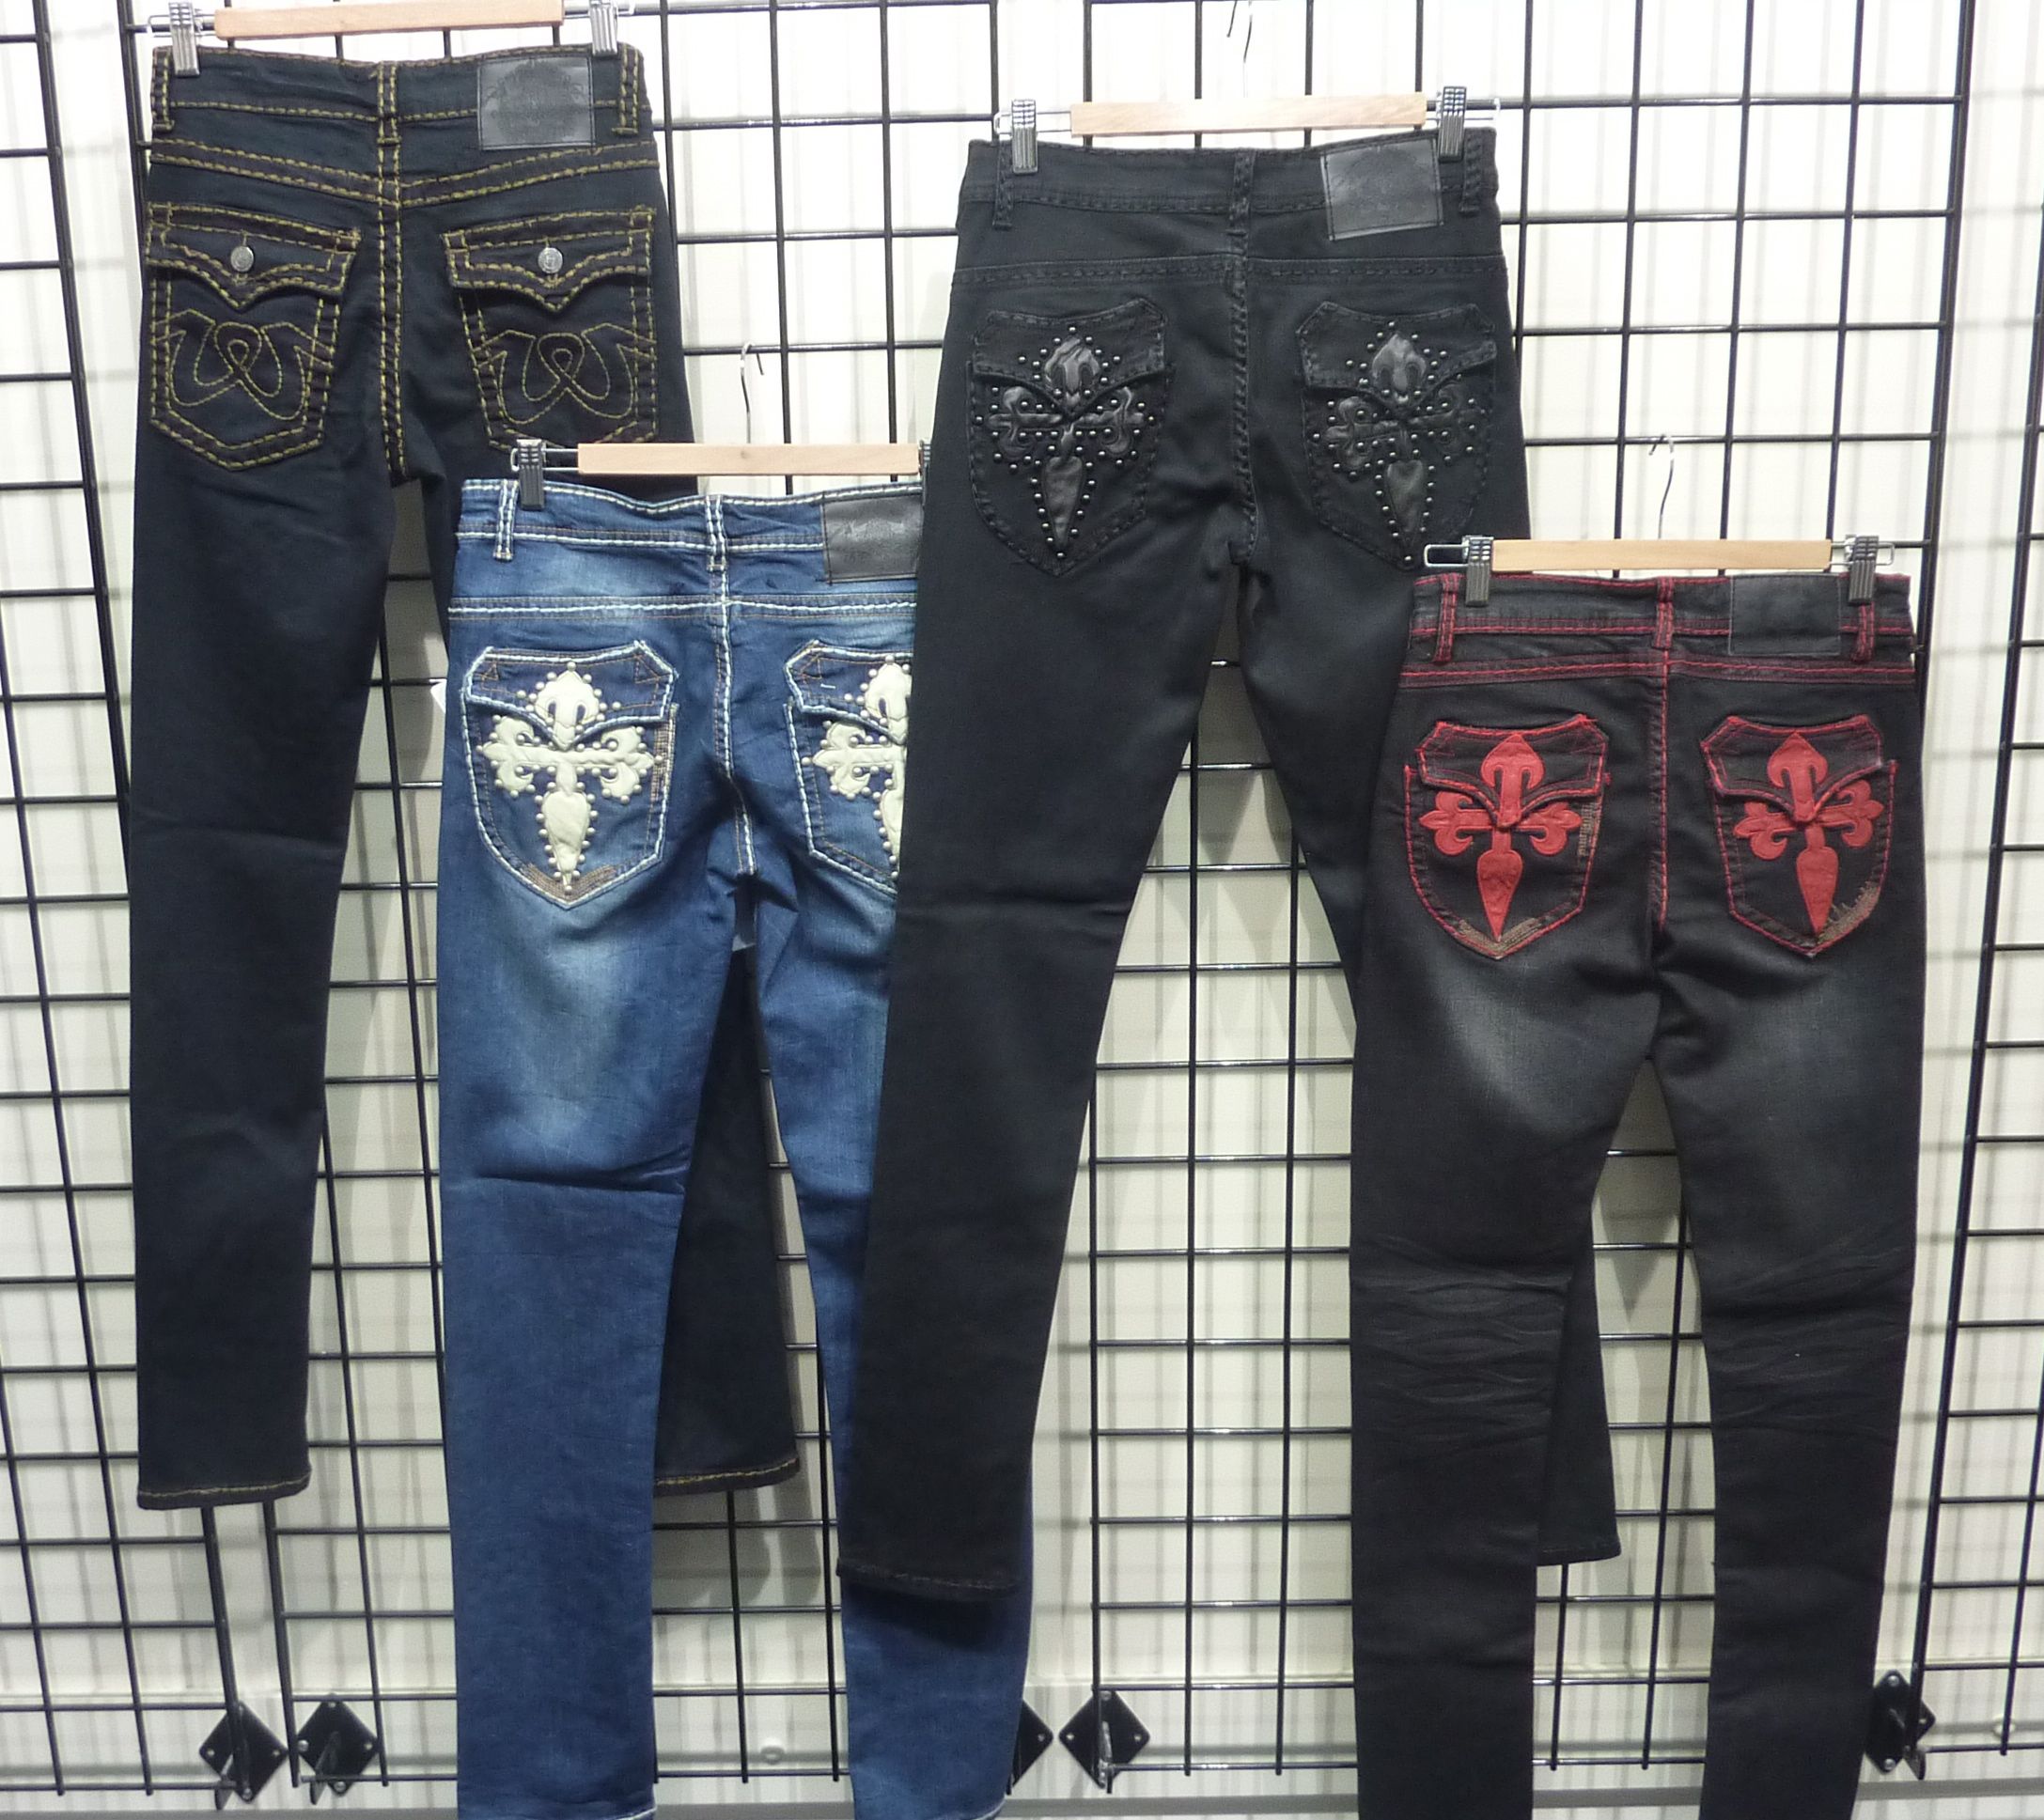 http://jenniferhansen.com.au/wp-content/uploads/2013/04/Statement-stitching-is-a-hallmark-of-London-Jeans.jpg